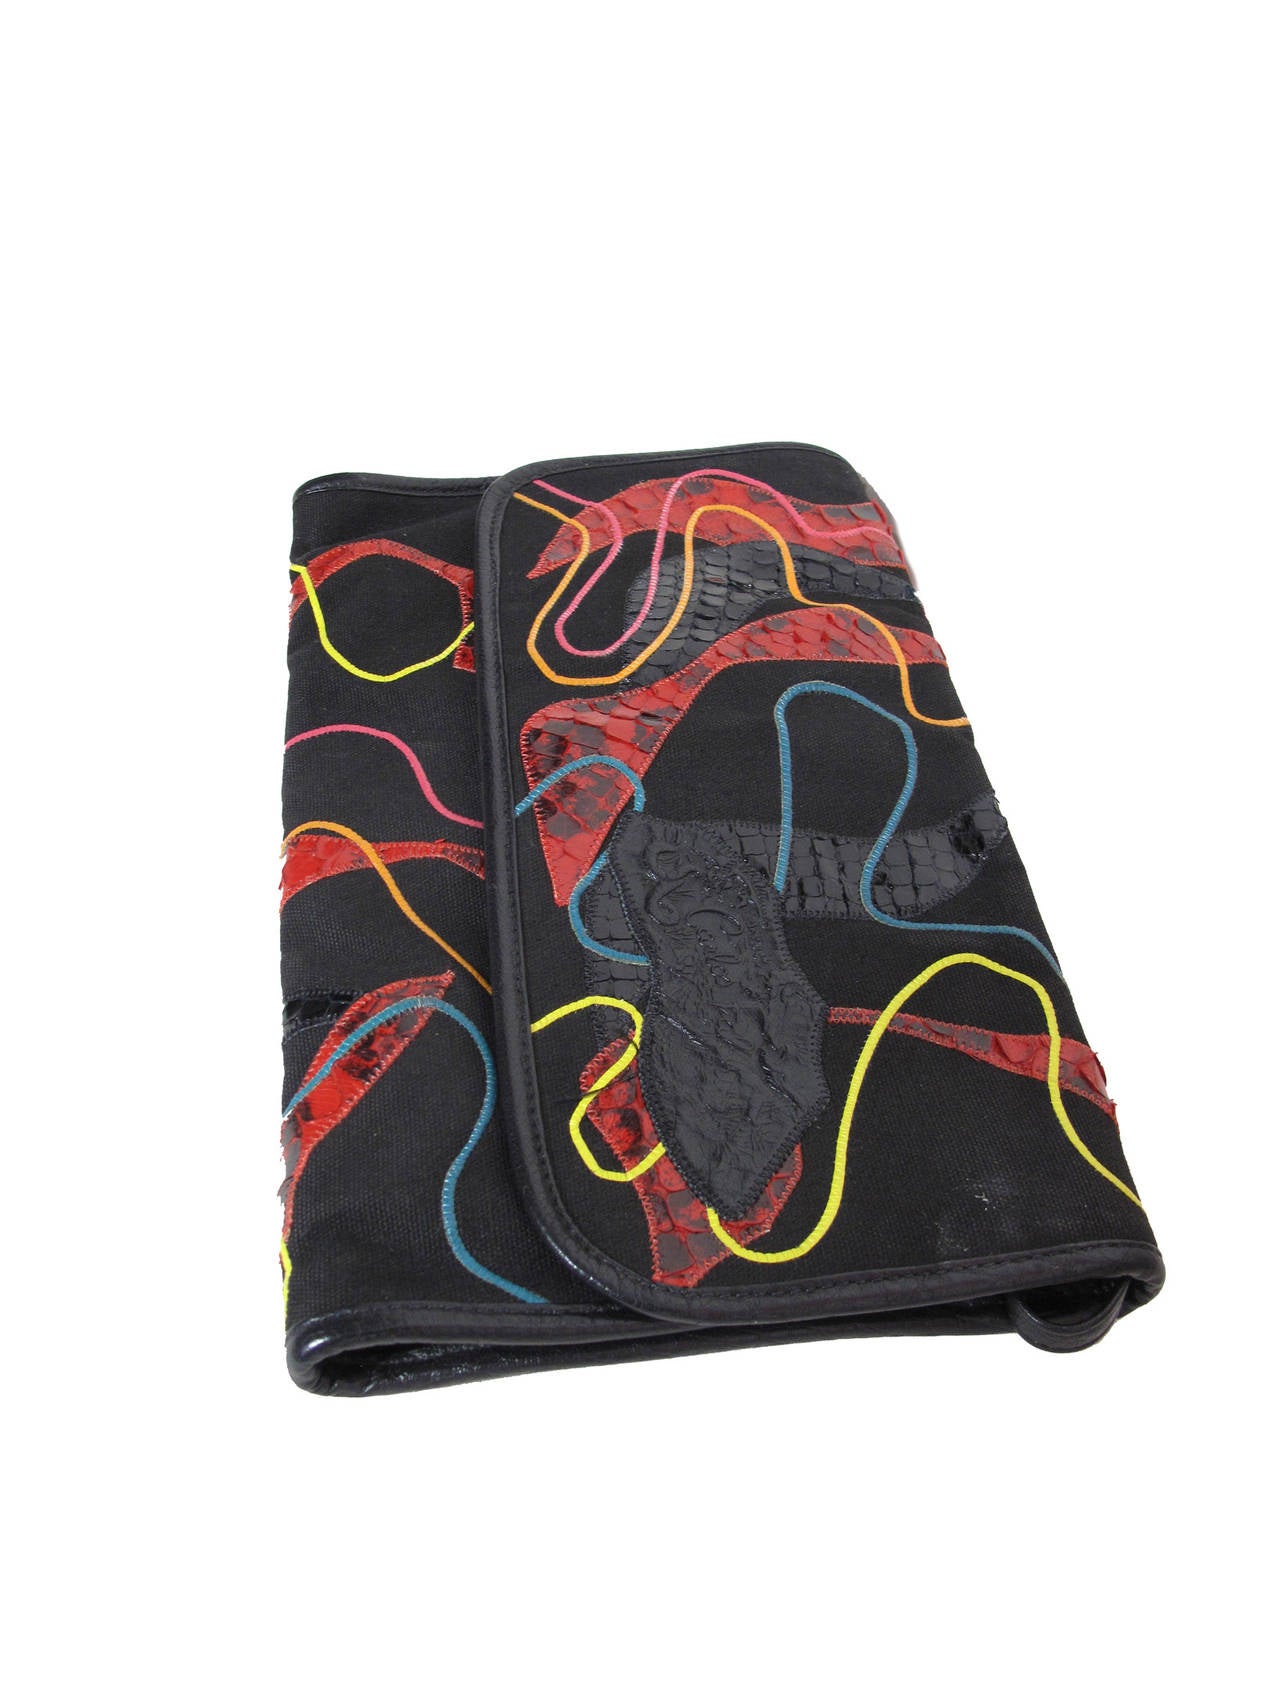 Carlos Falchi black canvas clutch/shoulder bag with snakeskin appliqués. Condition: Excellent. 11 1/2